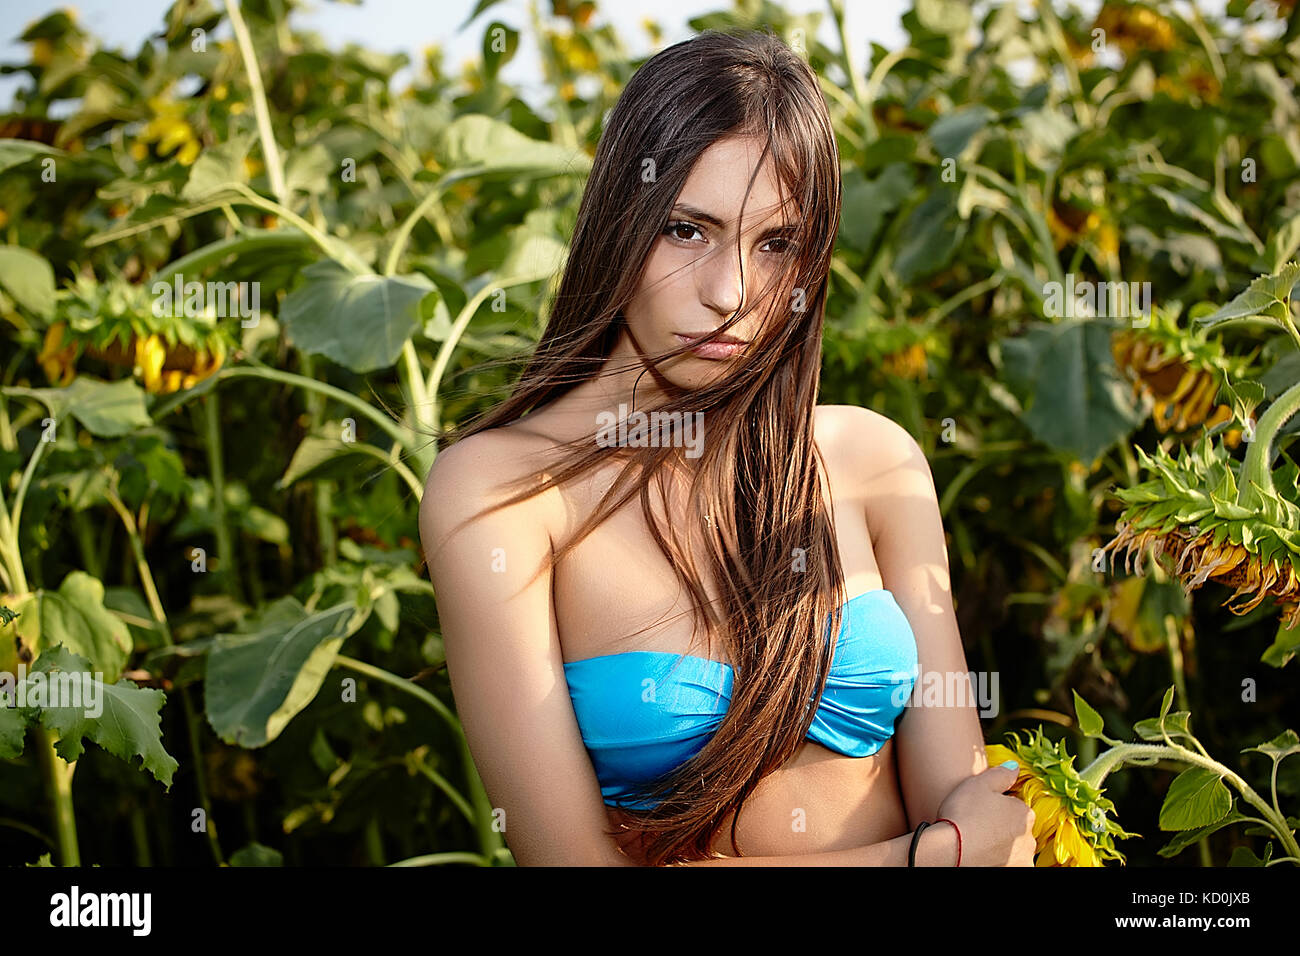 Portrait of young woman in bikini top in sunflower field Stock Photo